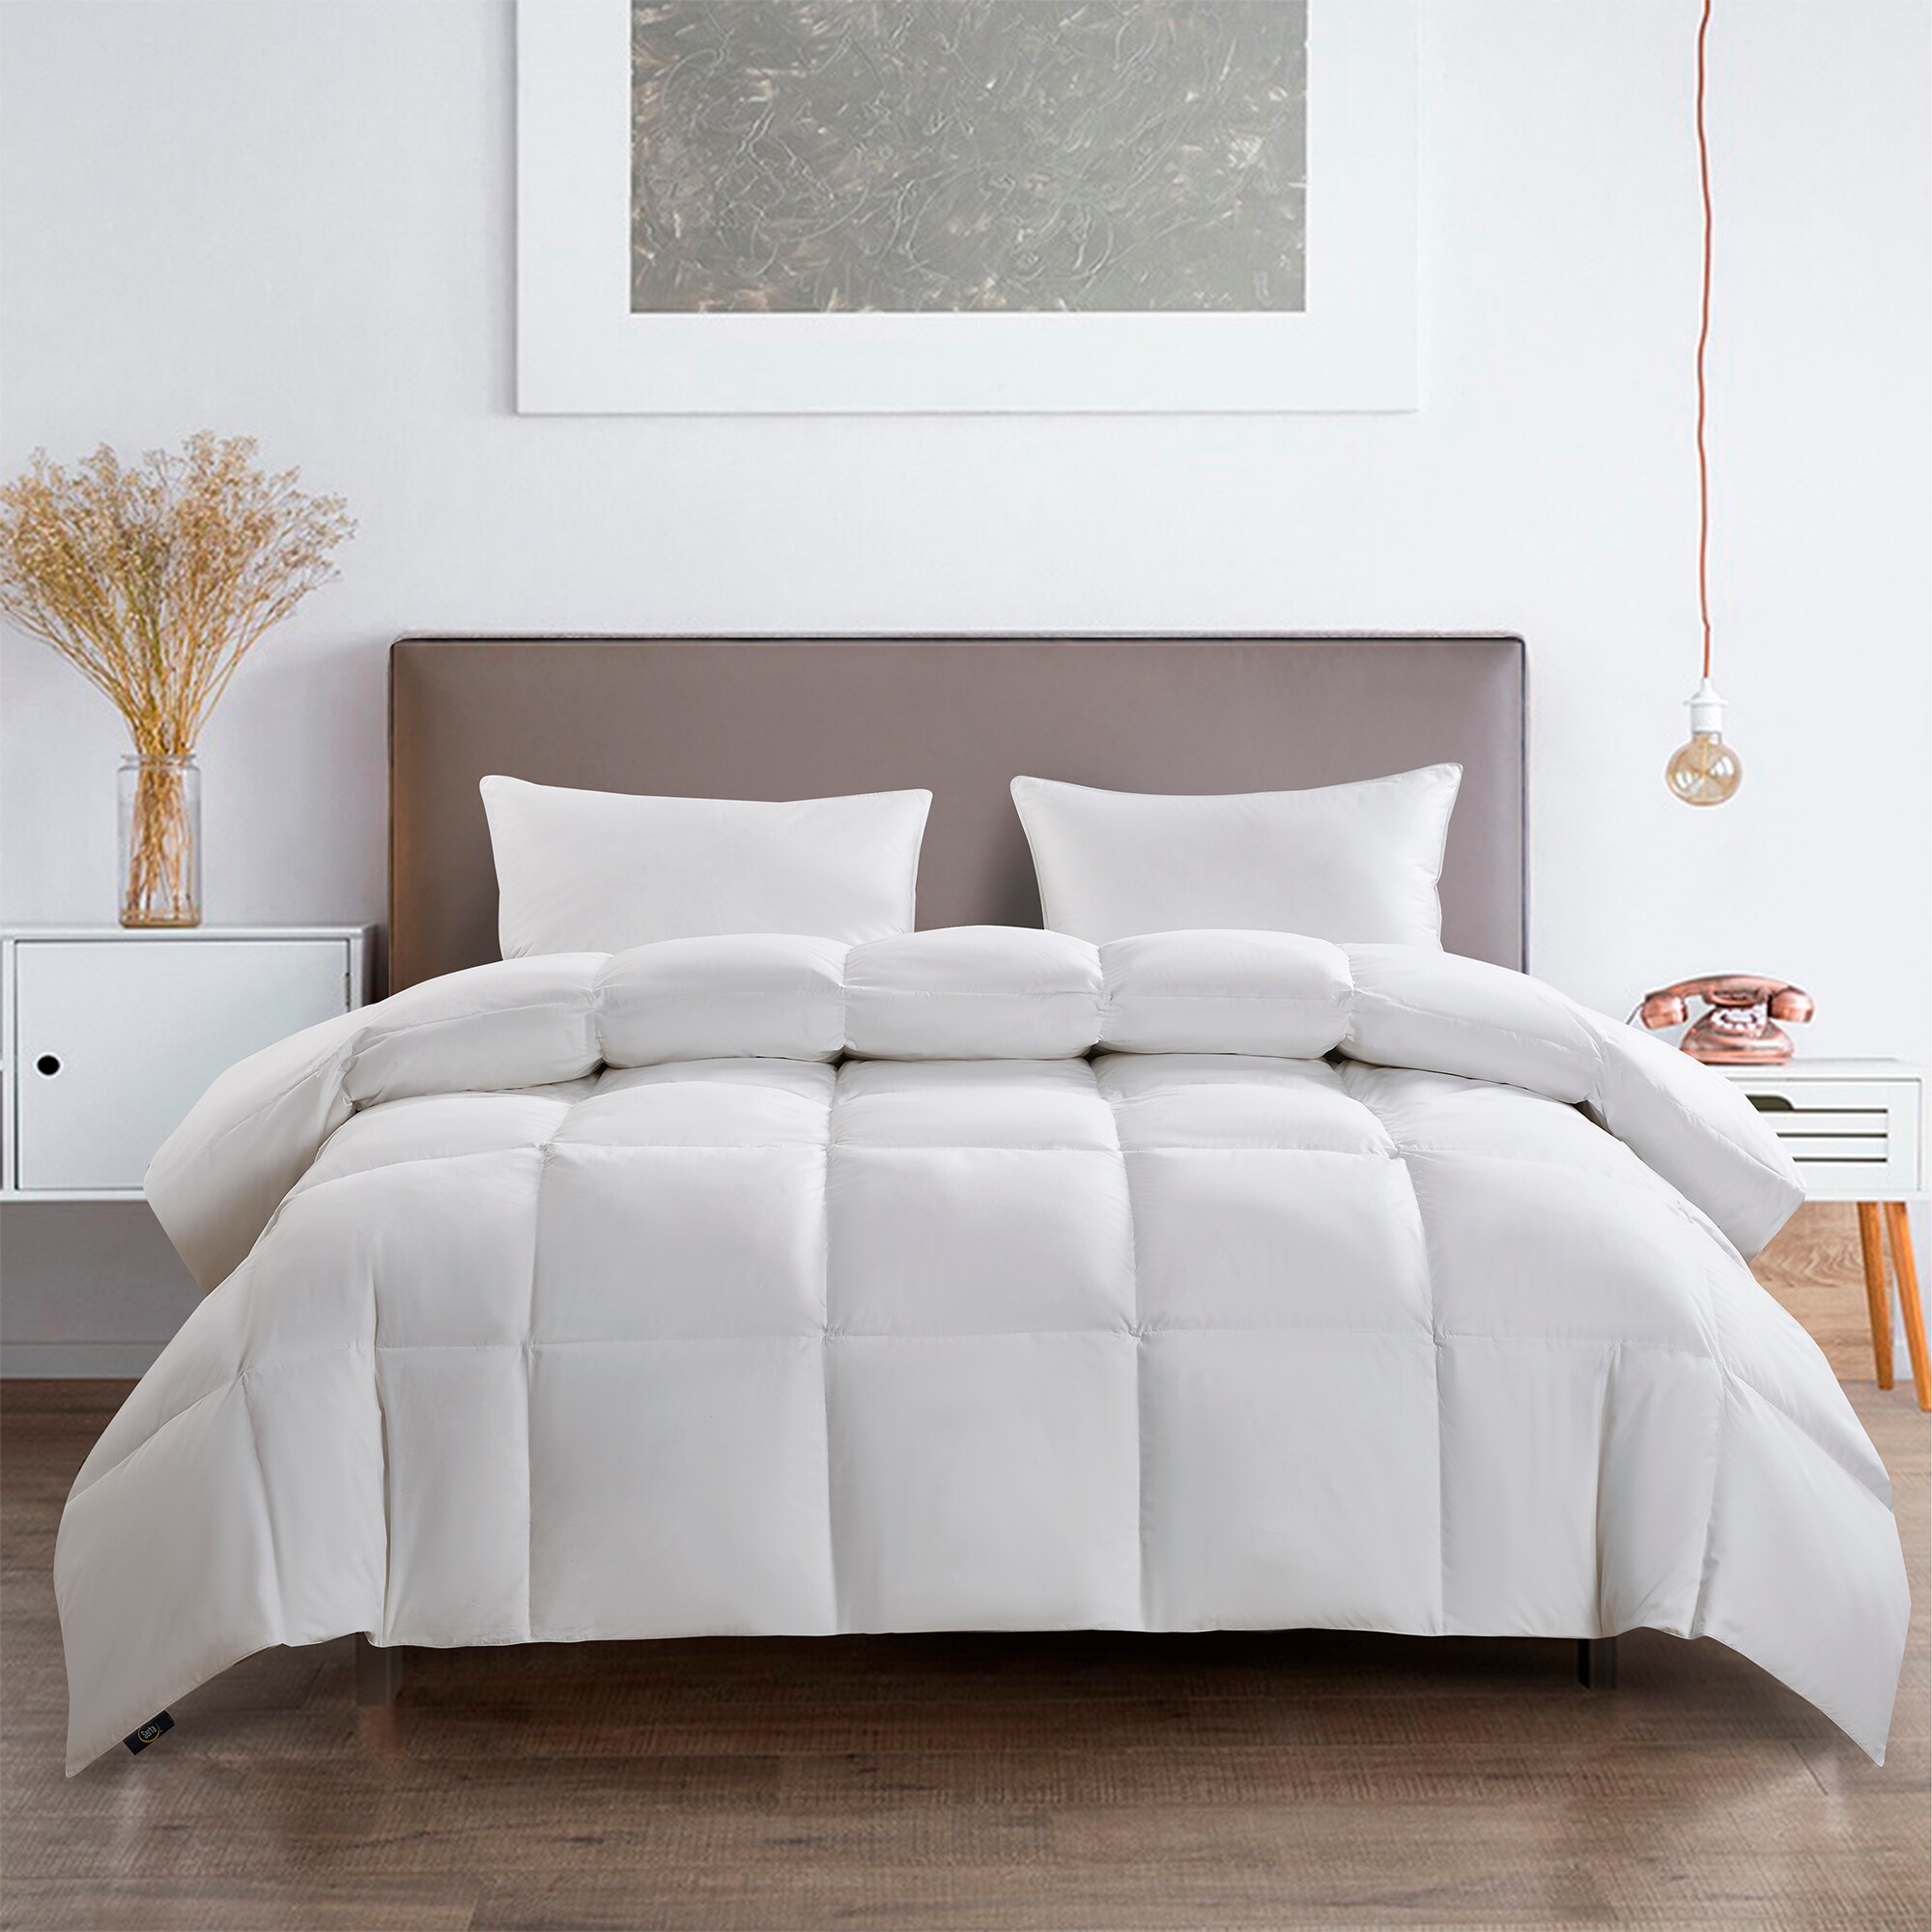 SexyTown Grey Comforter Queen Set,100% Cotton Bed Down Alternative Comforter,Lightweight Reversible Gray Tree Branches Bedding Duvet Sets 3-Piece 